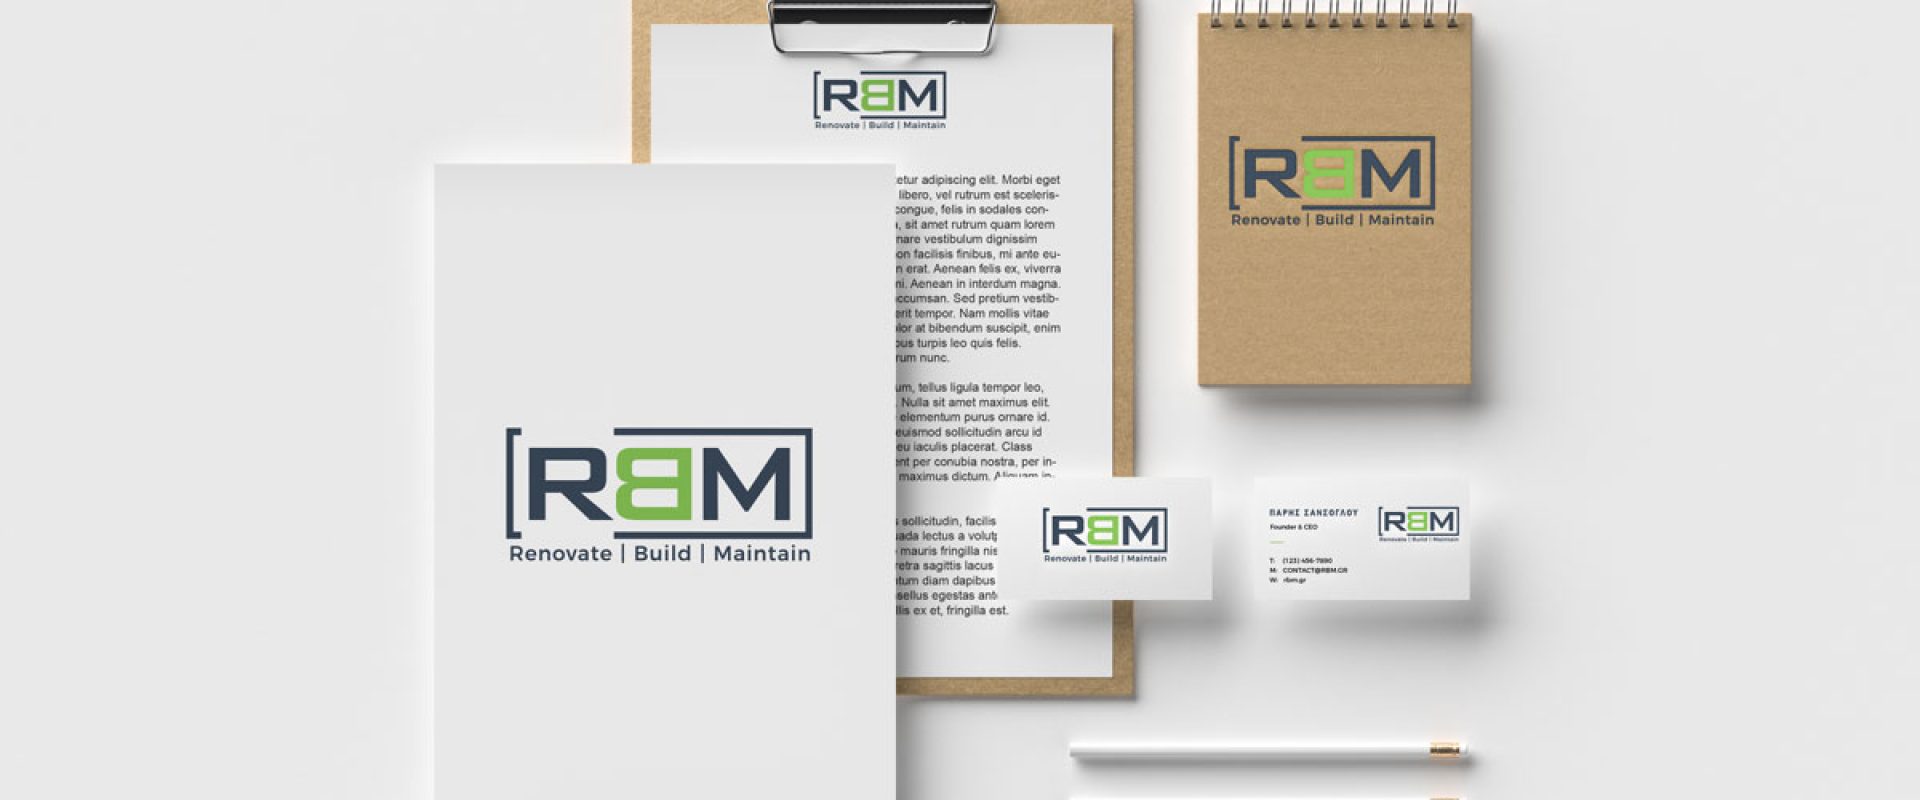 branding rmb company